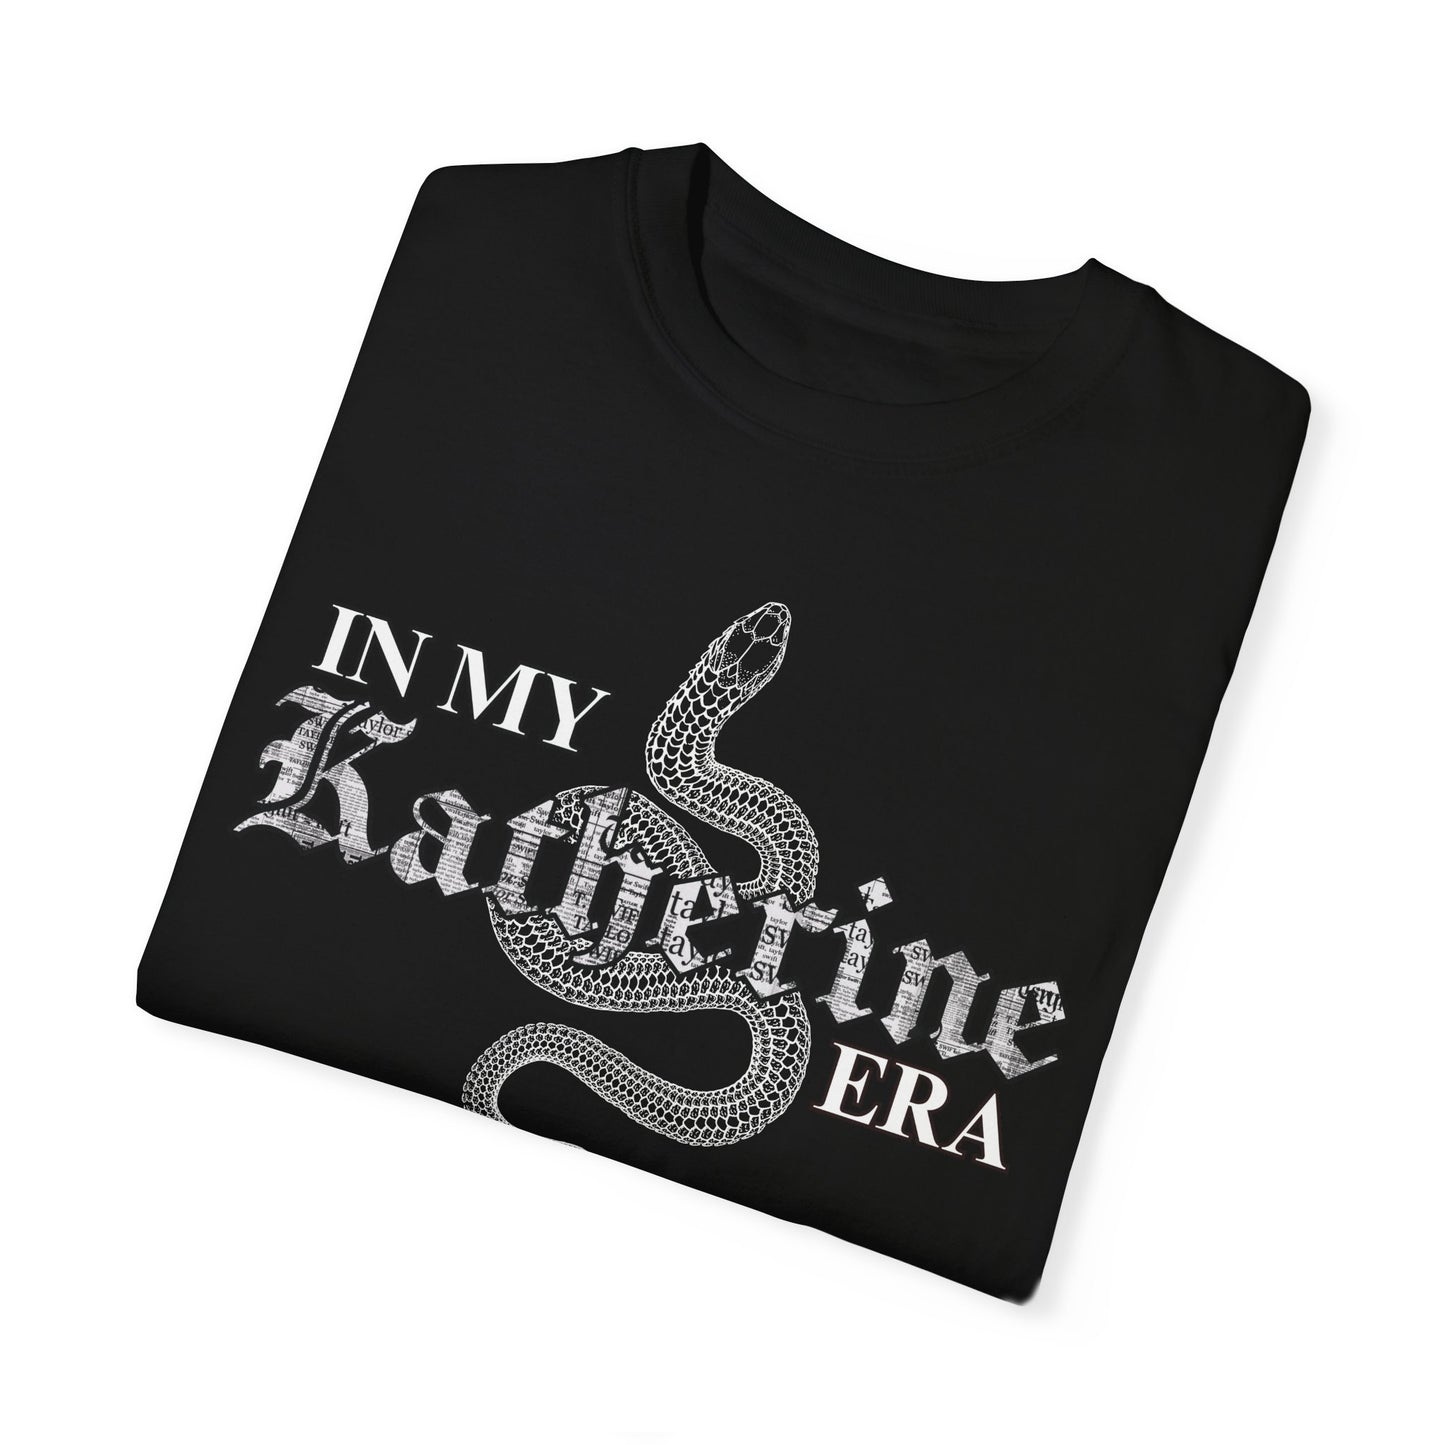 In my Katherine Era shirt